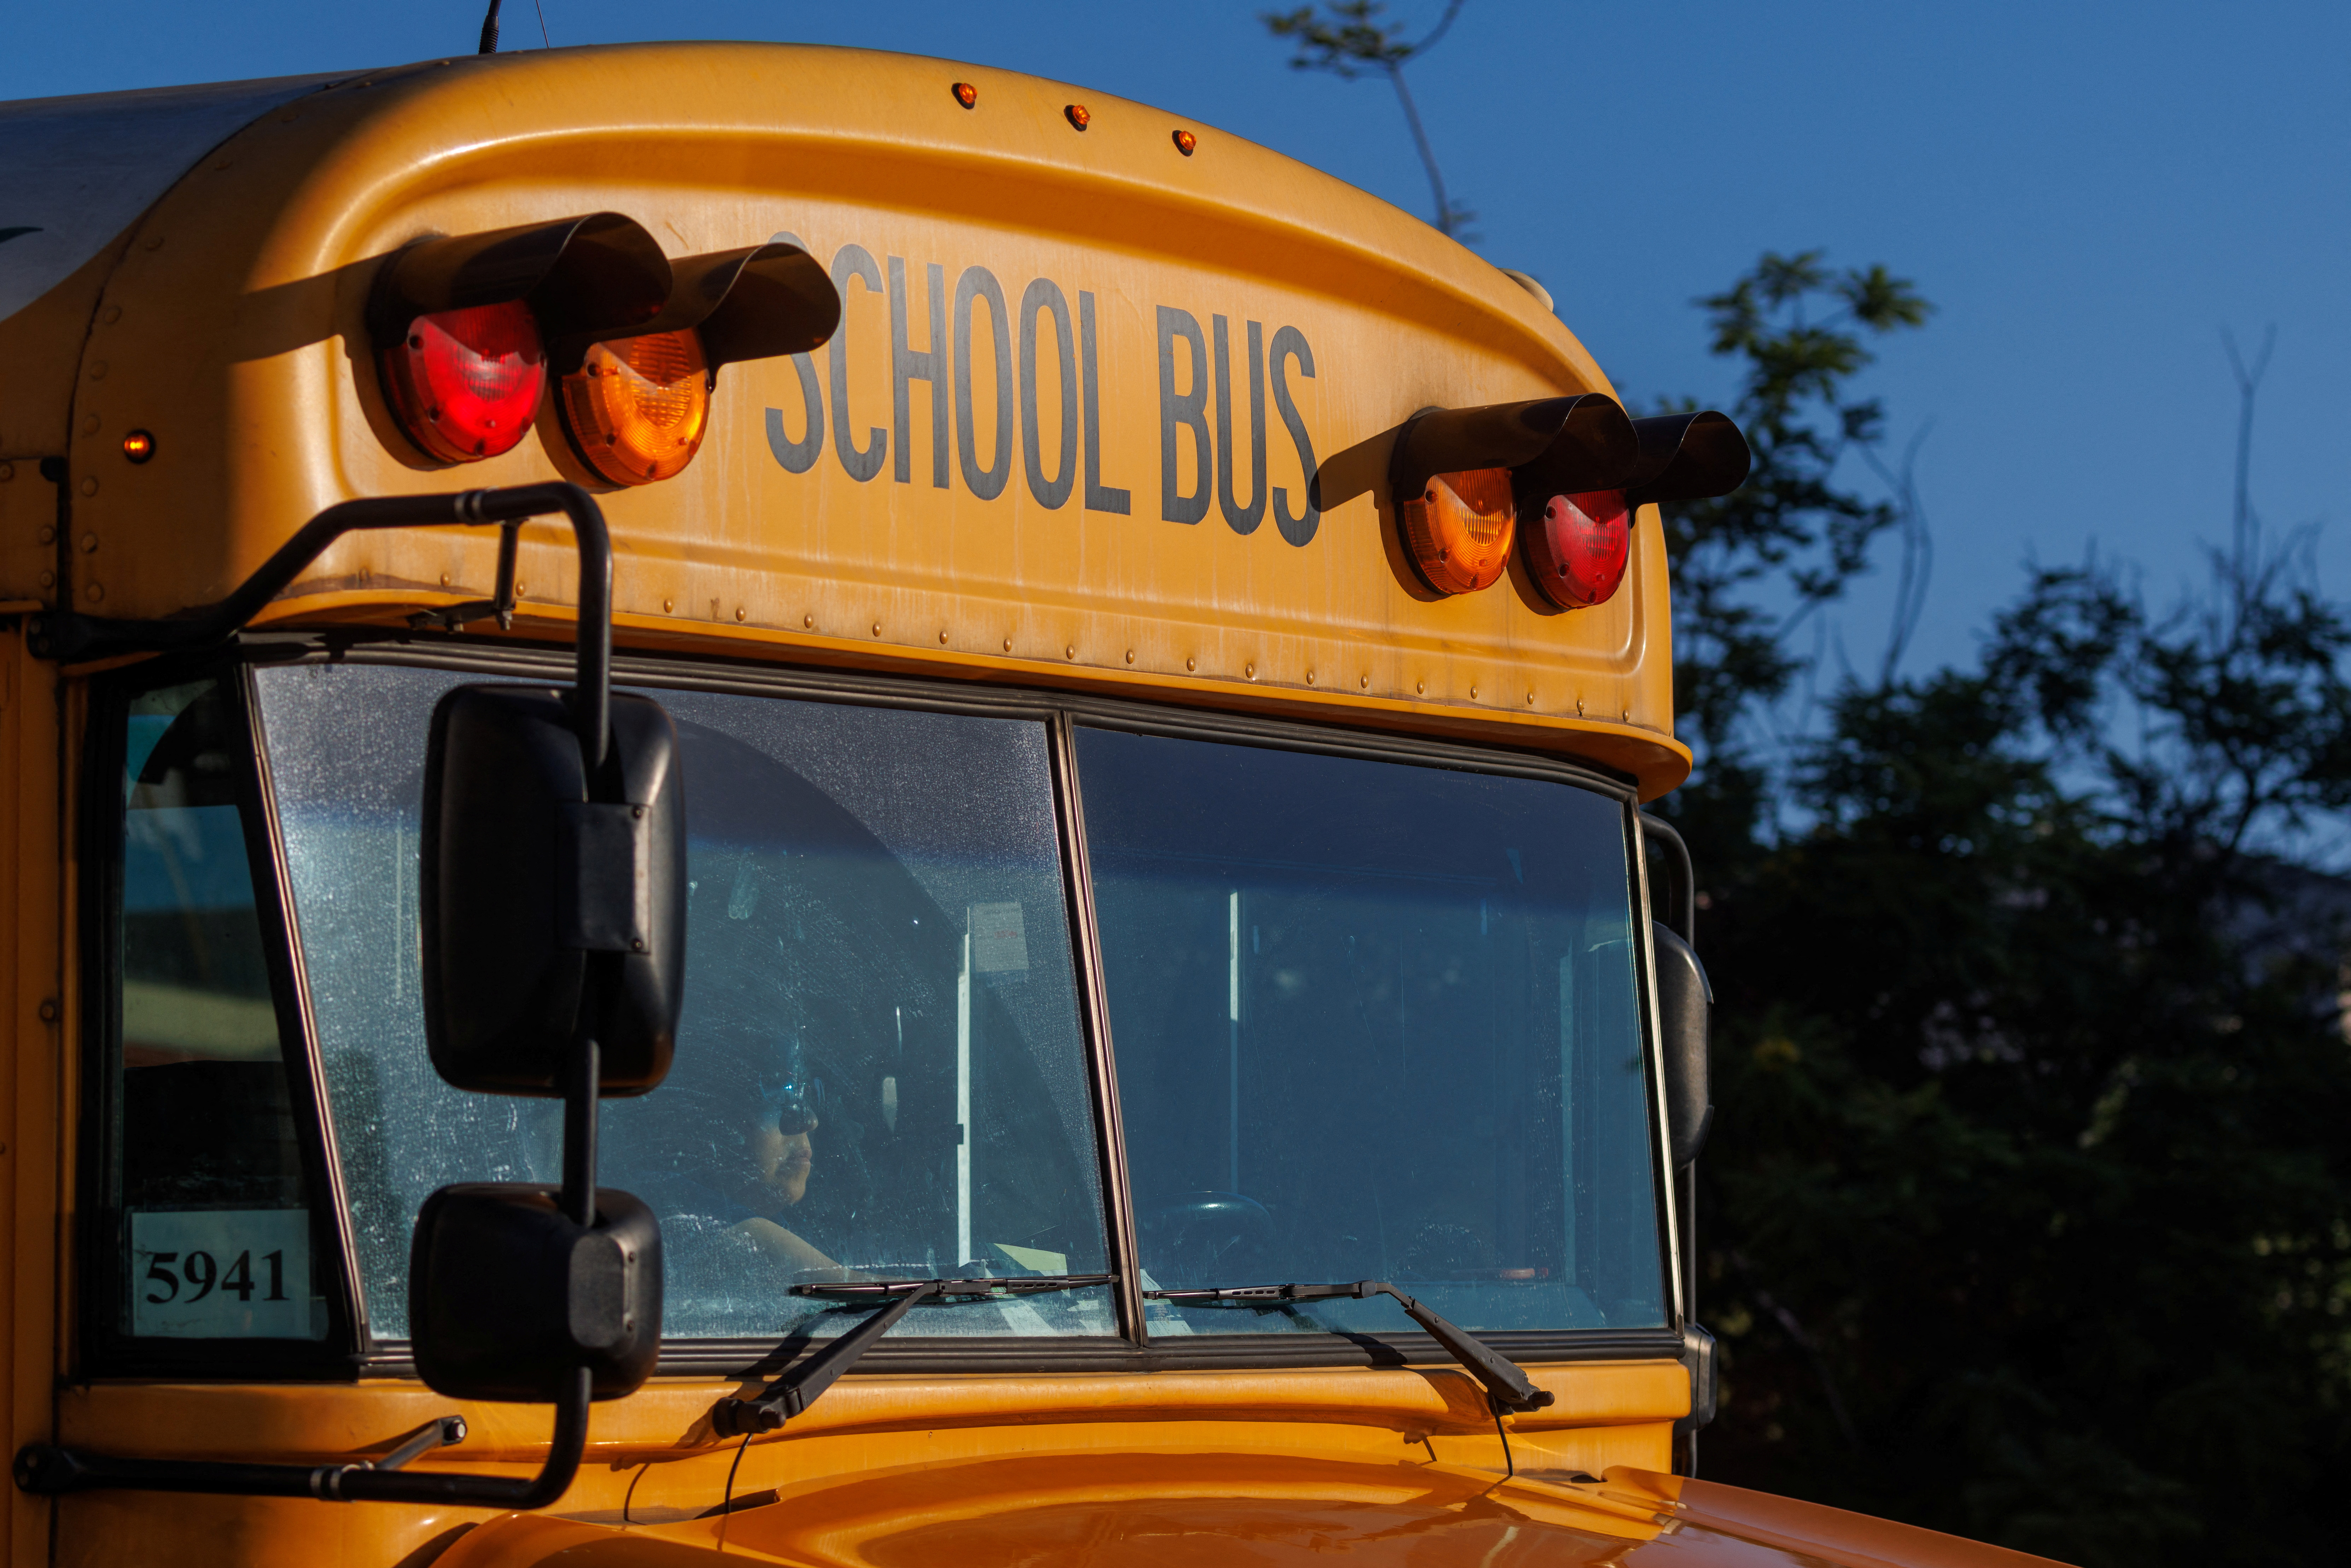 School bus drivers navigates Los Angeles streets